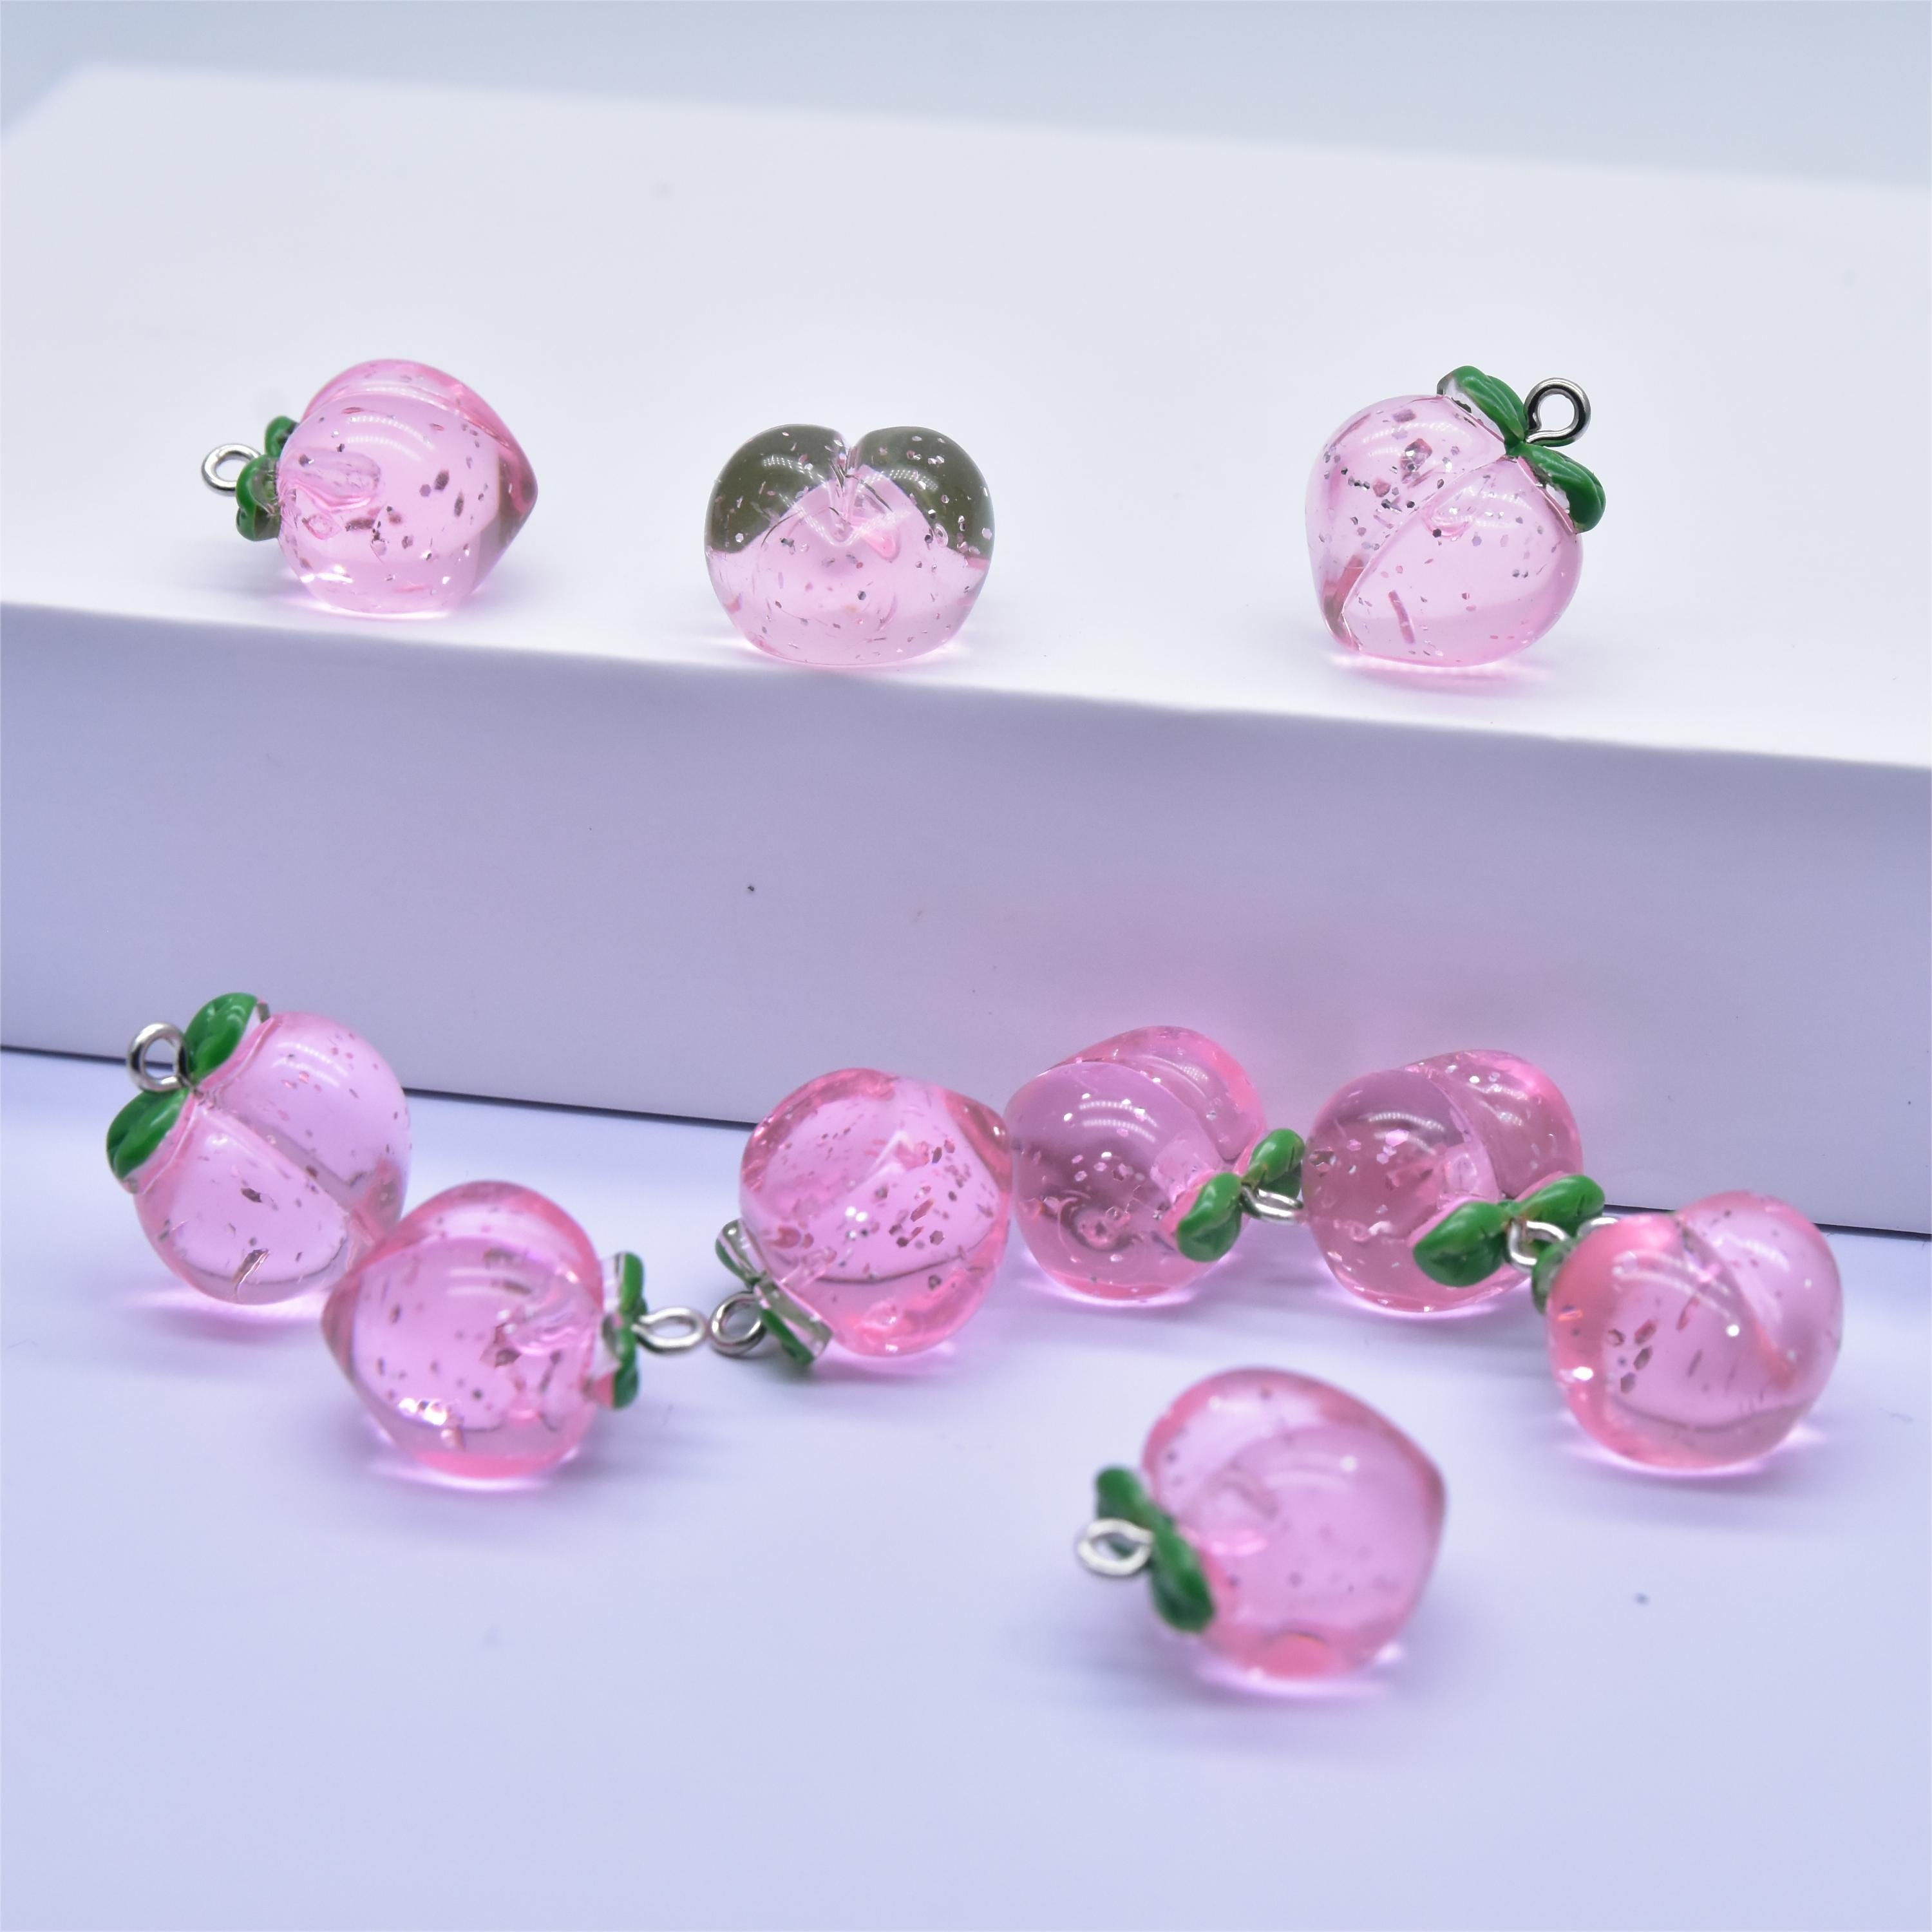 10 Mix Cherry Peach Lemon Apple Enamel Charms Fruit Alloy Pendant Jewelry  Crafts